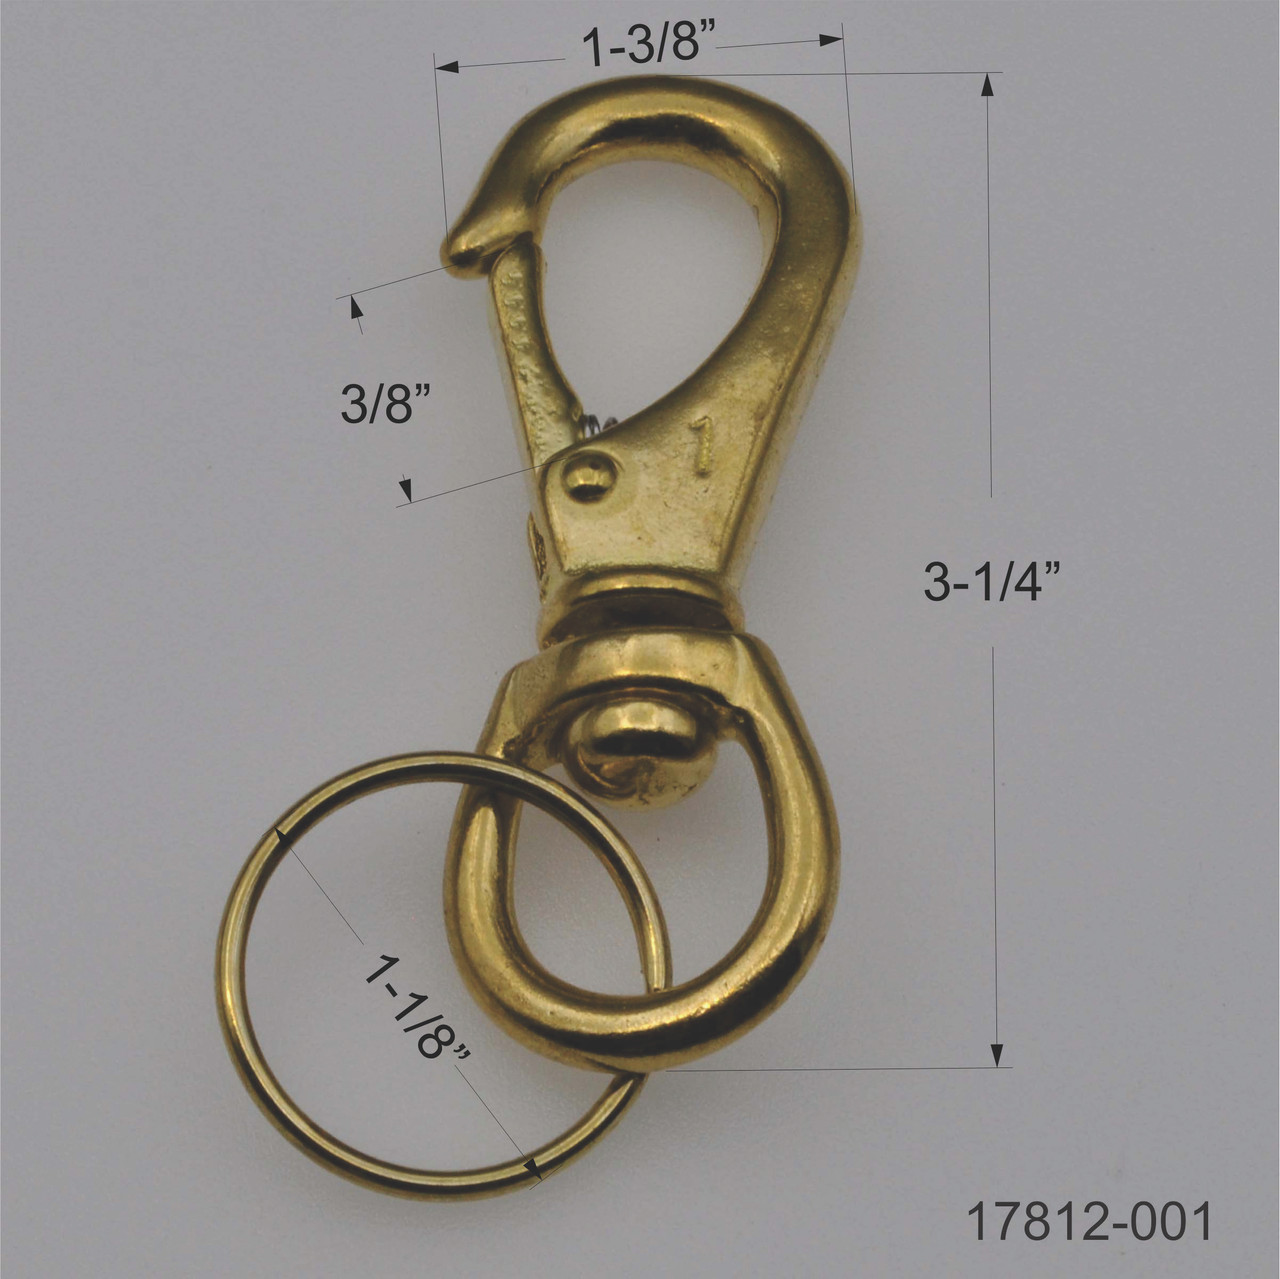 Heavy Duty Boat Snap Clip Key Ring - Solid Brass